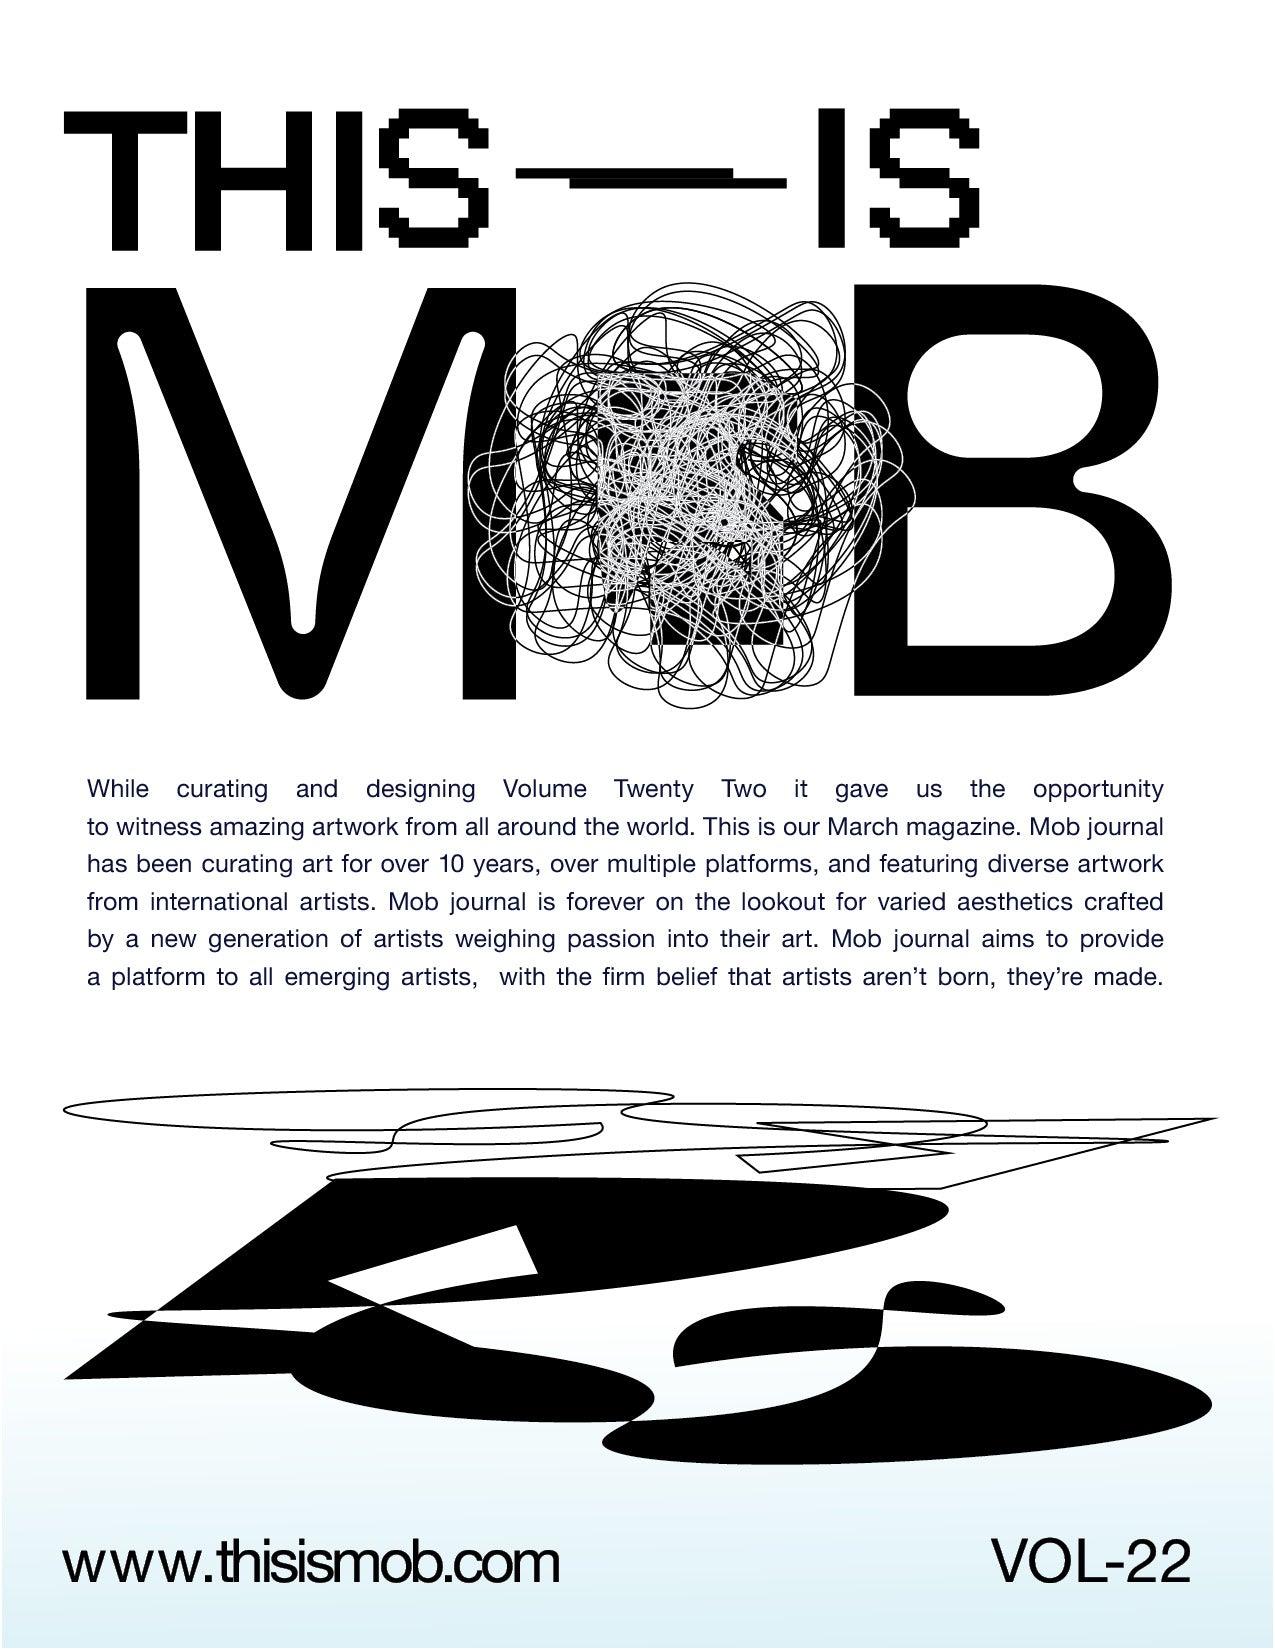 MOB JOURNAL | VOLUME TWENTY TWO | ISSUE #39 - Mob Journal